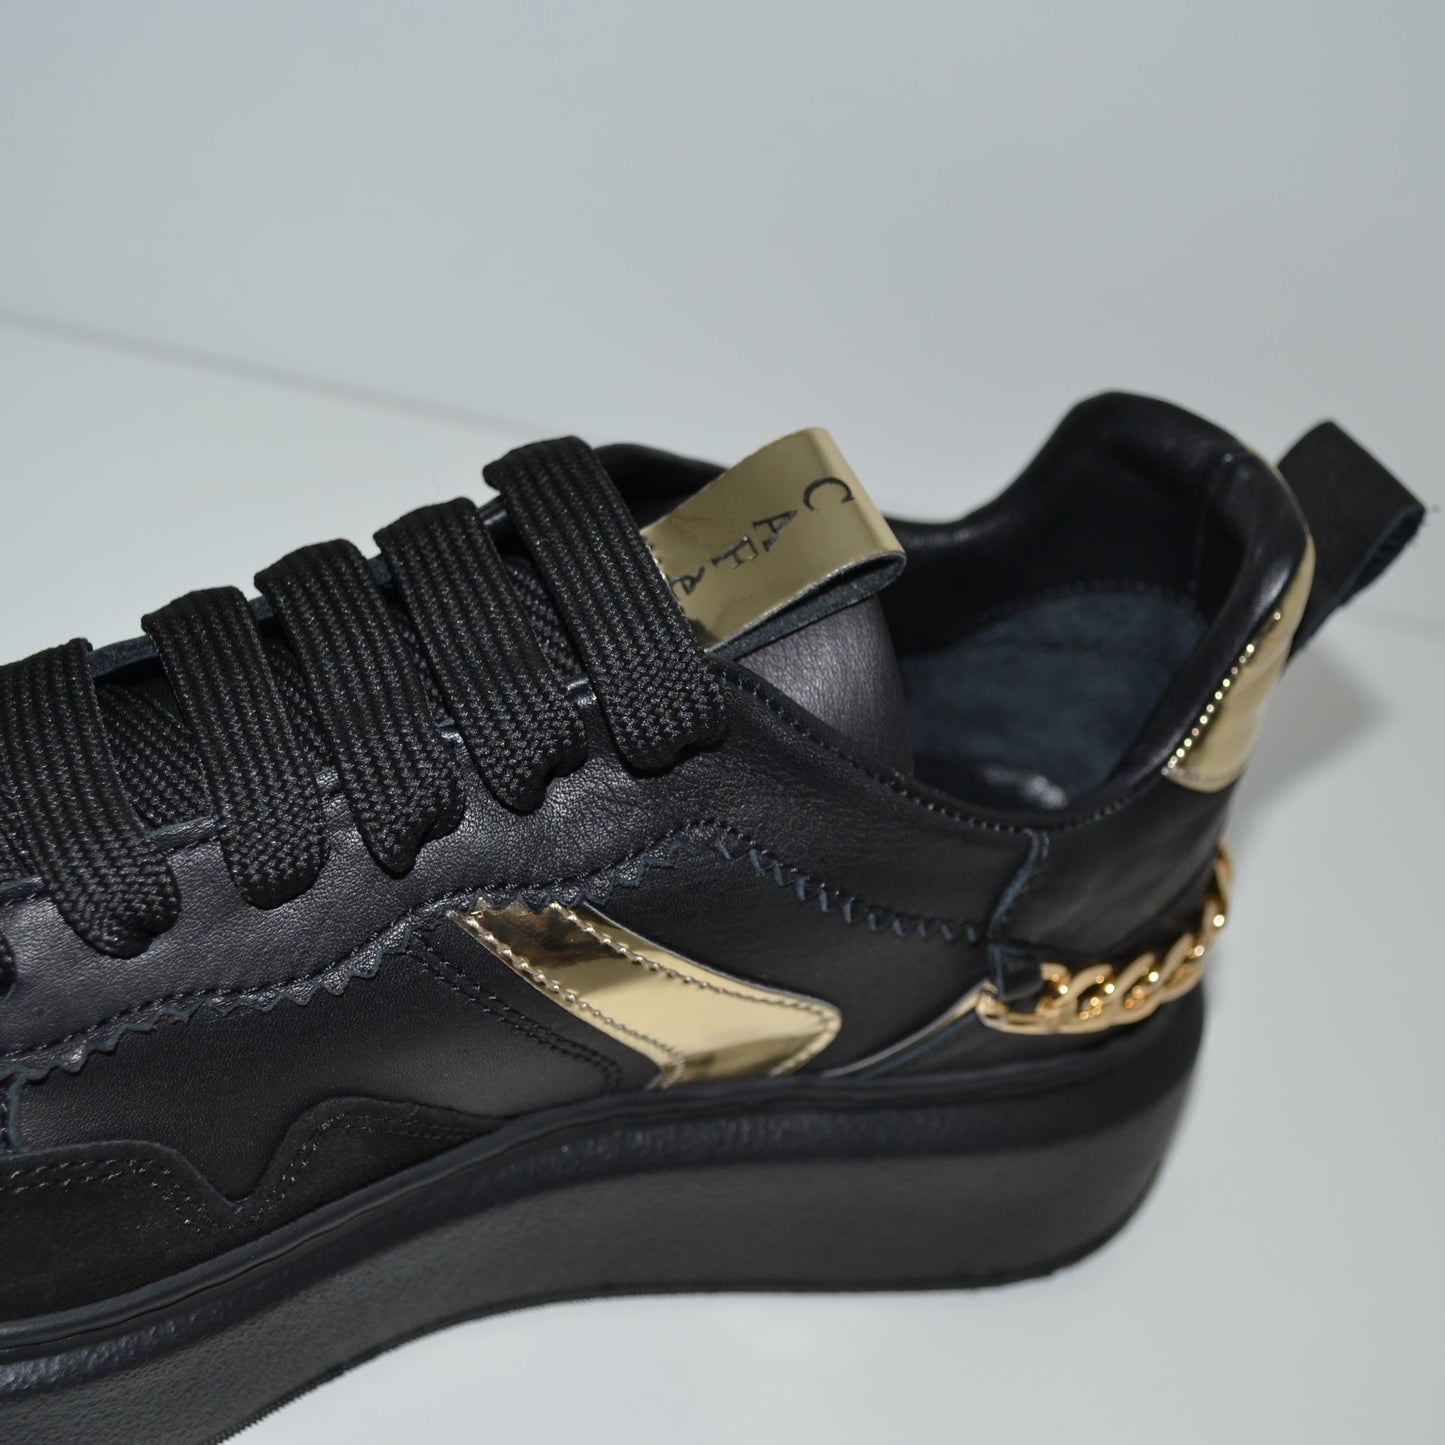 Sneakers CafèNoir woman black leather gold applications